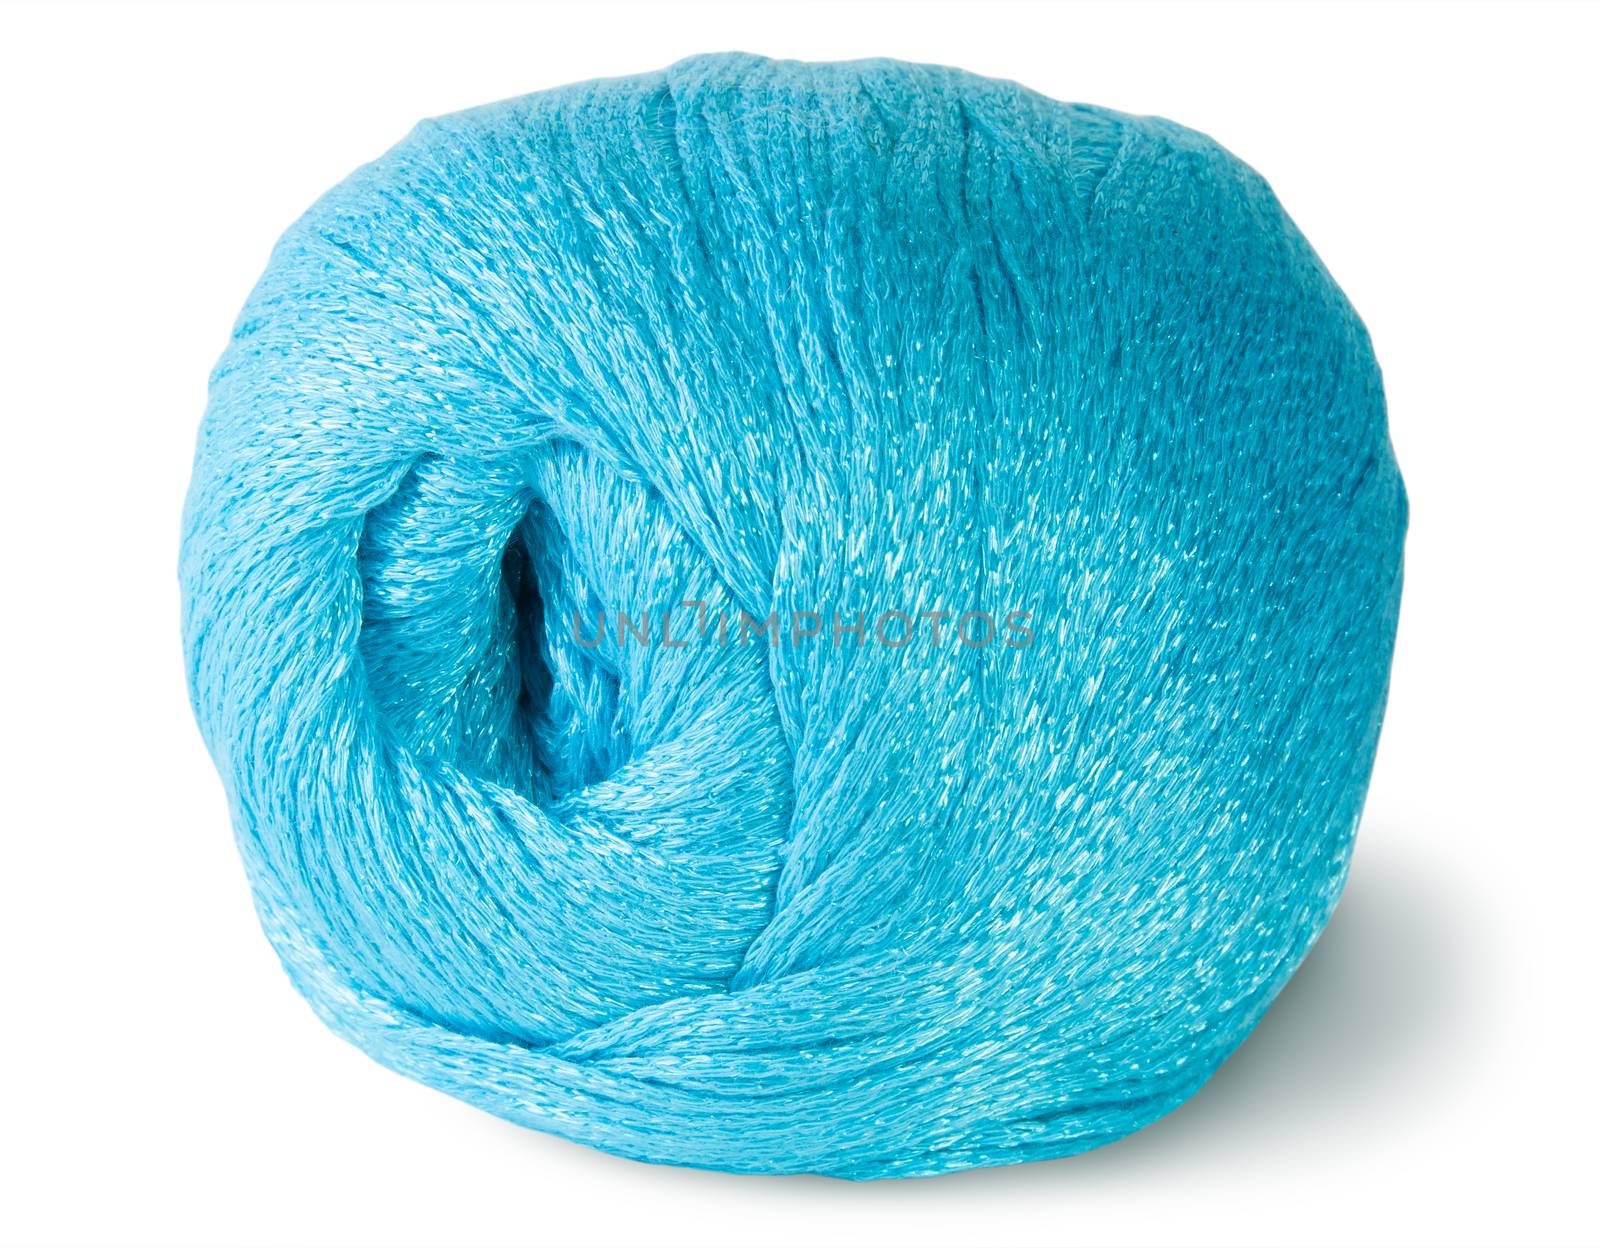 Blue knitting yarn clew by Cipariss